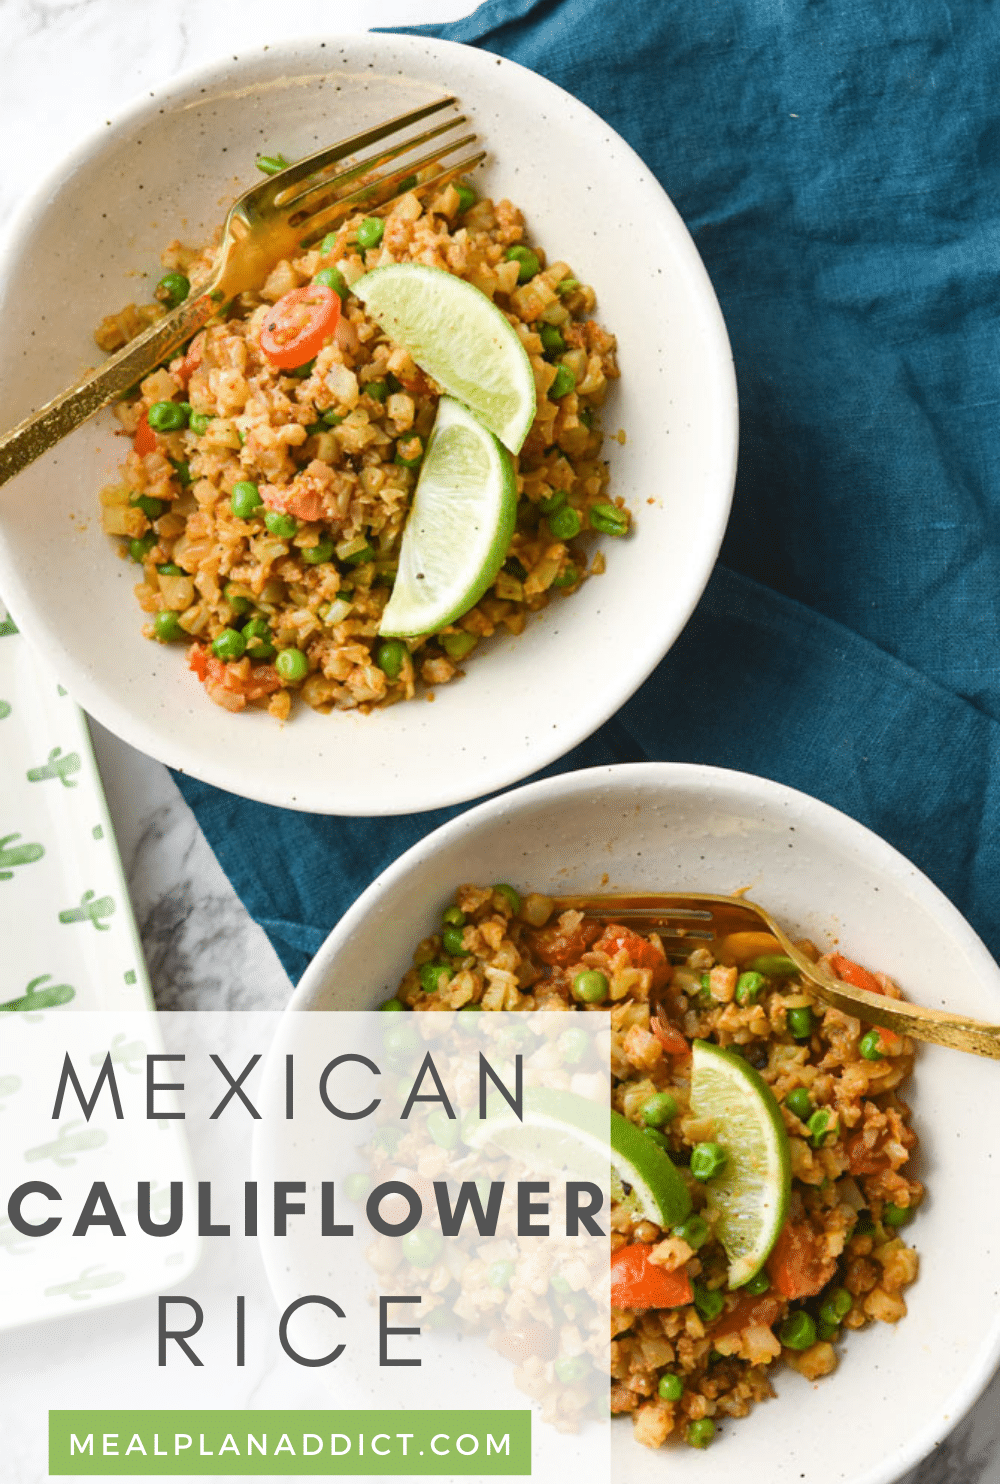 Cauliflower rice pin for Pinterest